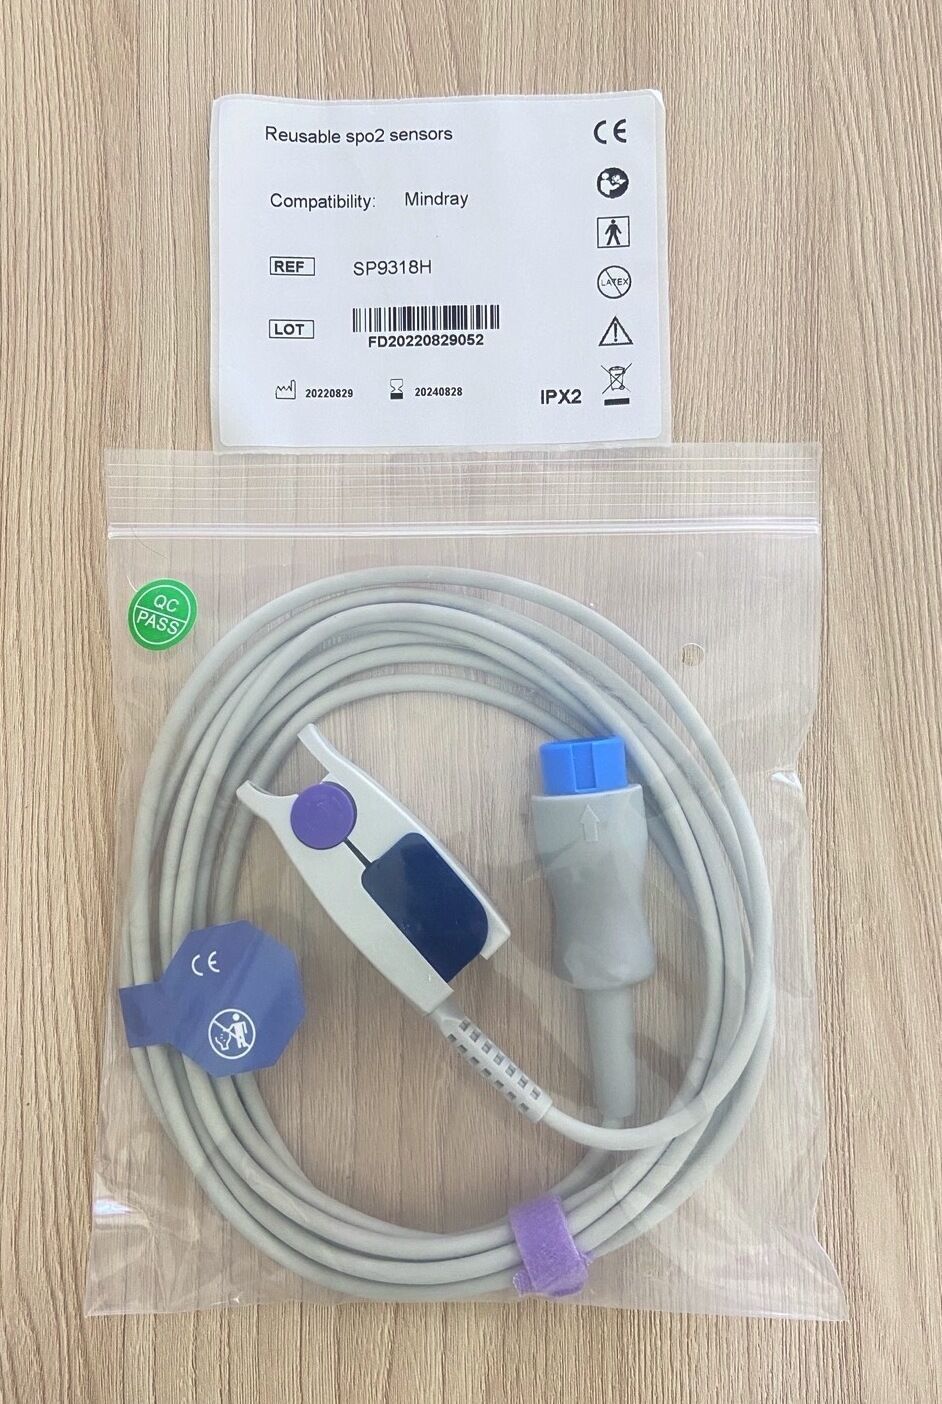 Spo2 Adult Nellcor Cable Blue Connector for Mindray_สายโพรบแซทเคเบิ้ลแบบข้อต่อสีน้ำเงินเครื่องมอนิเตอร์ผู้ป่วย Mindray